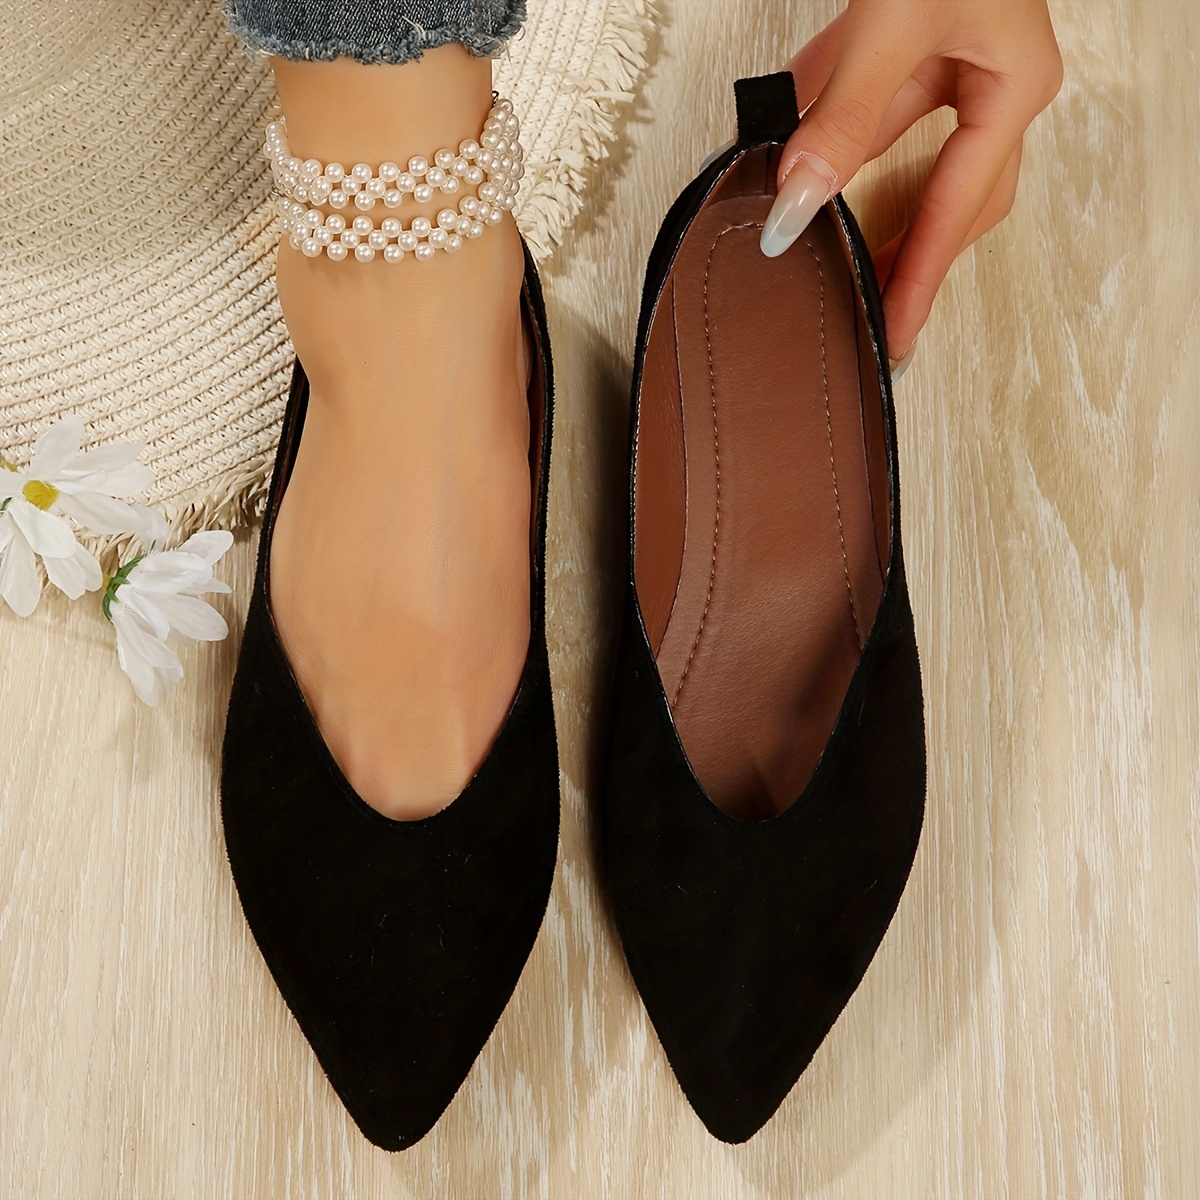 nsendm Womens Low Heel Dress Shoes Solid Flat shoes Fashion